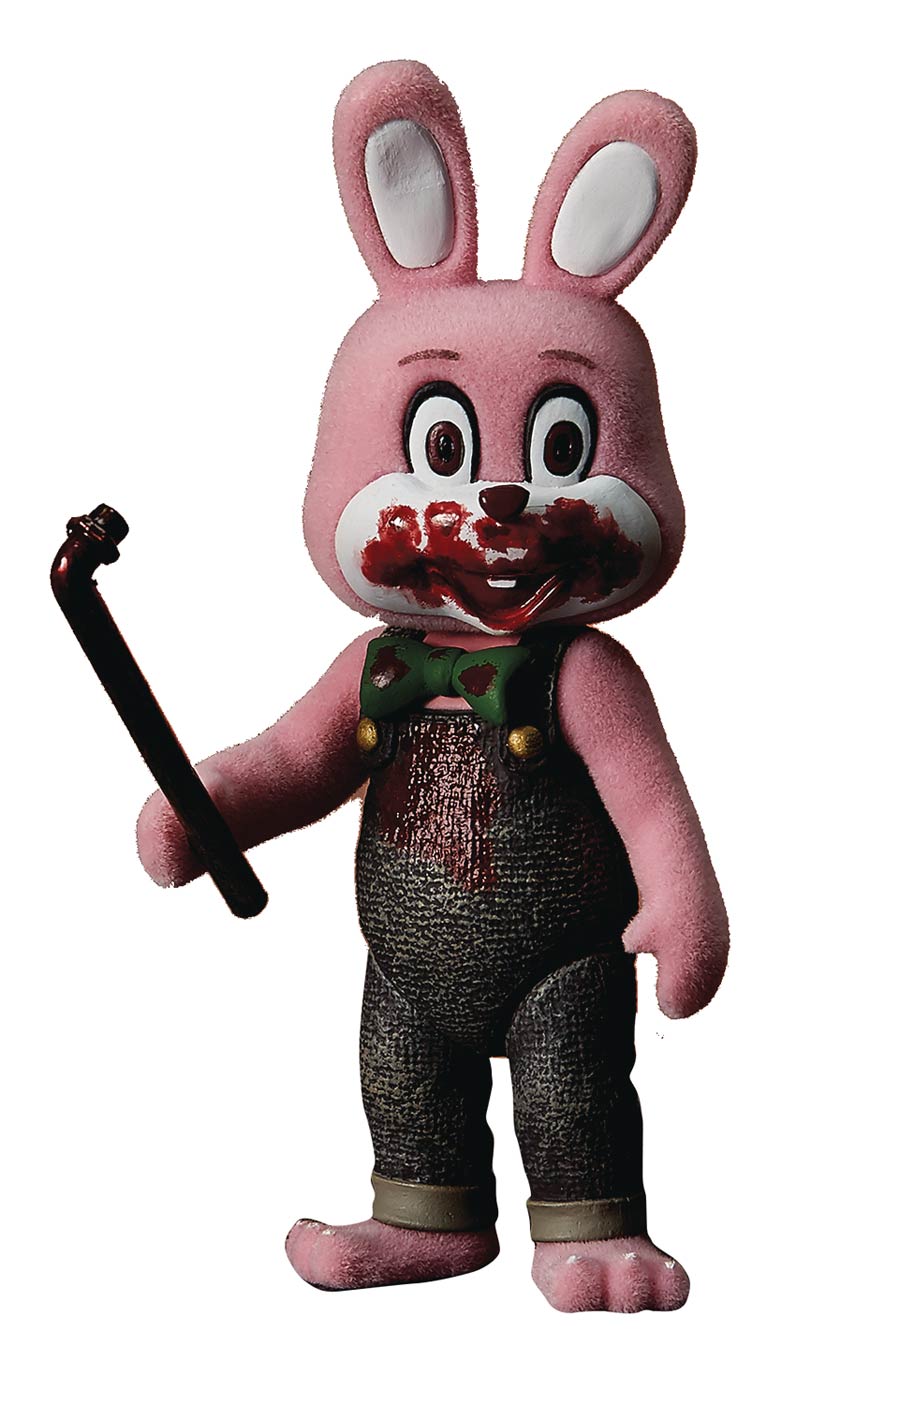 Silent Hill 3 Robbie The Rabbit Mini Figure - Pink Version